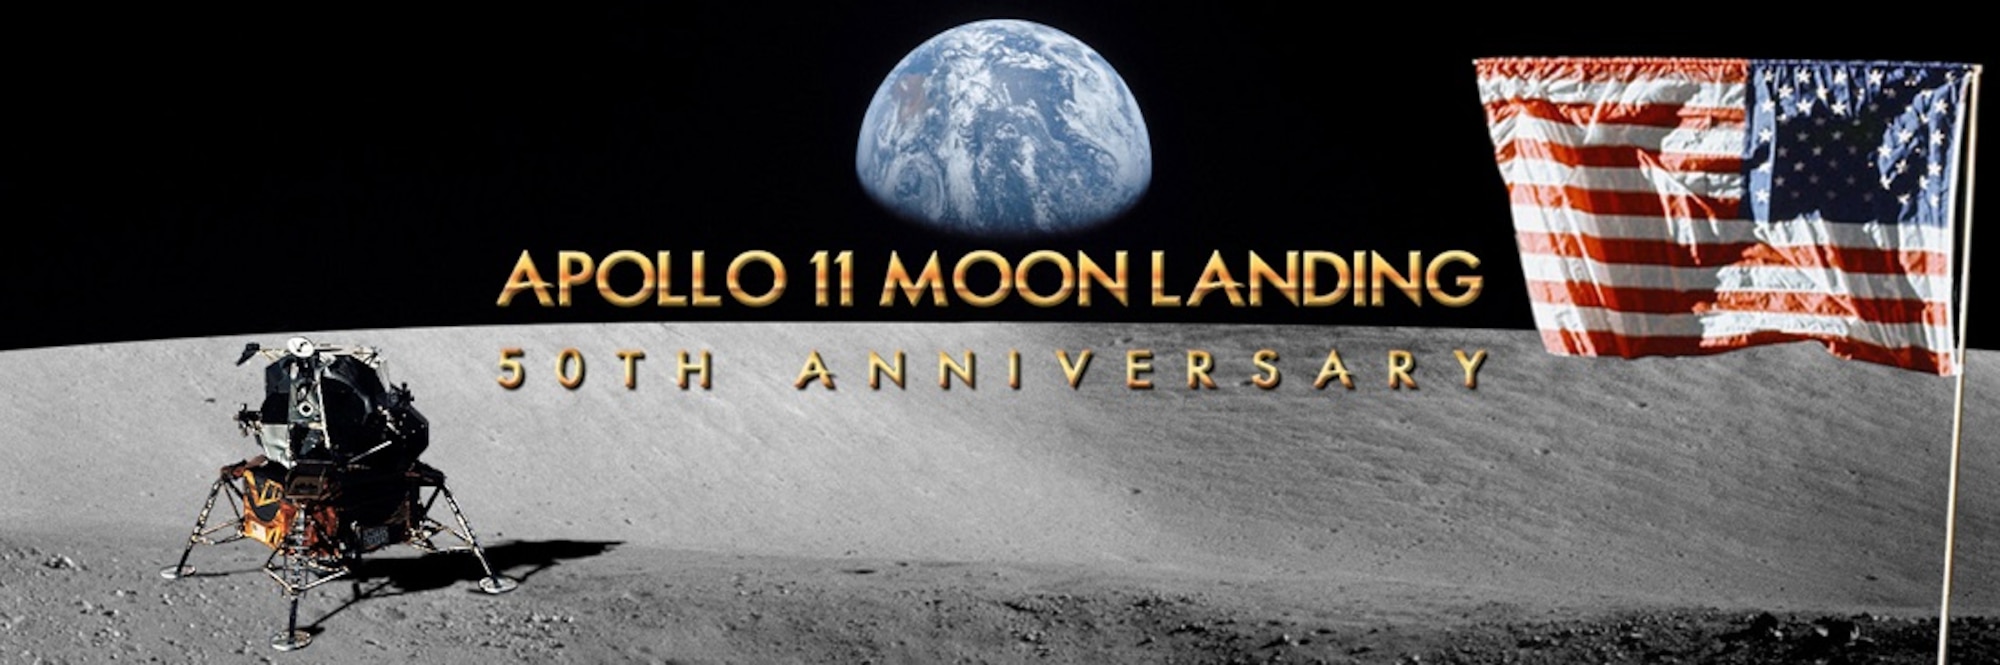 Apollo 11 moon landing 50th anniversary. (U.S. Air Force graphic/Vernon Greene)